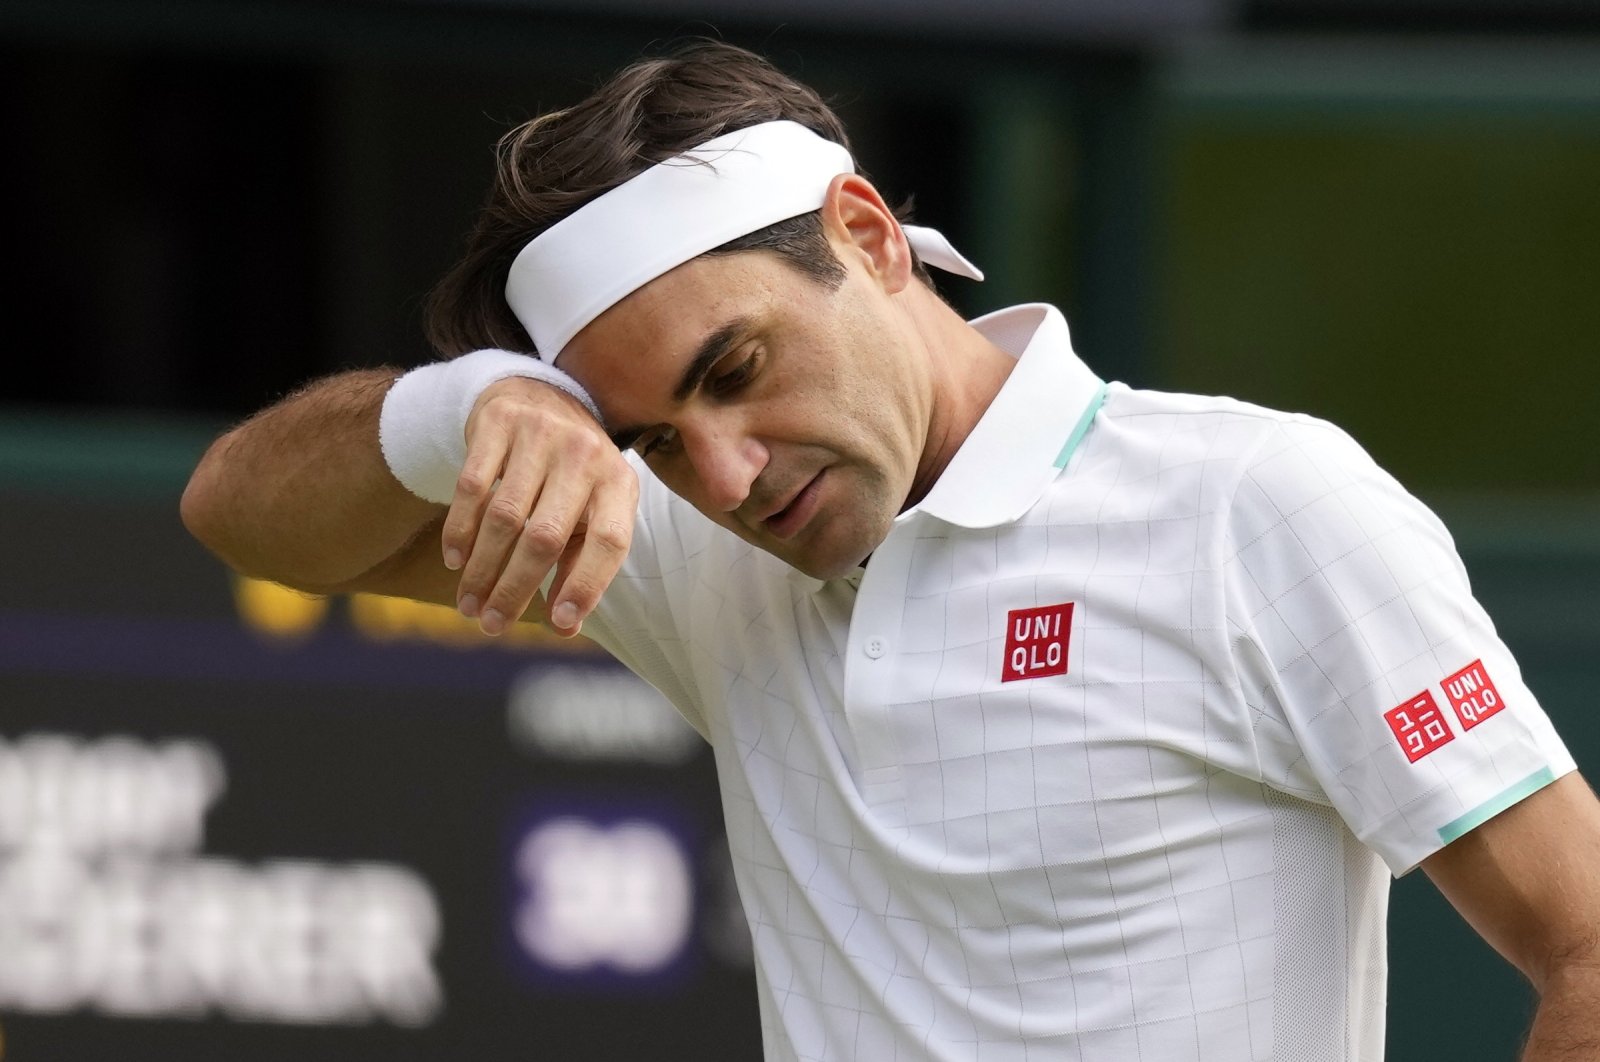 Switzerland's Roger Federer during the Wimbledon men's singles quarterfinal against Poland's Hubert Hurkacz in London, England, Aug. 5, 2021. (AP Photo)